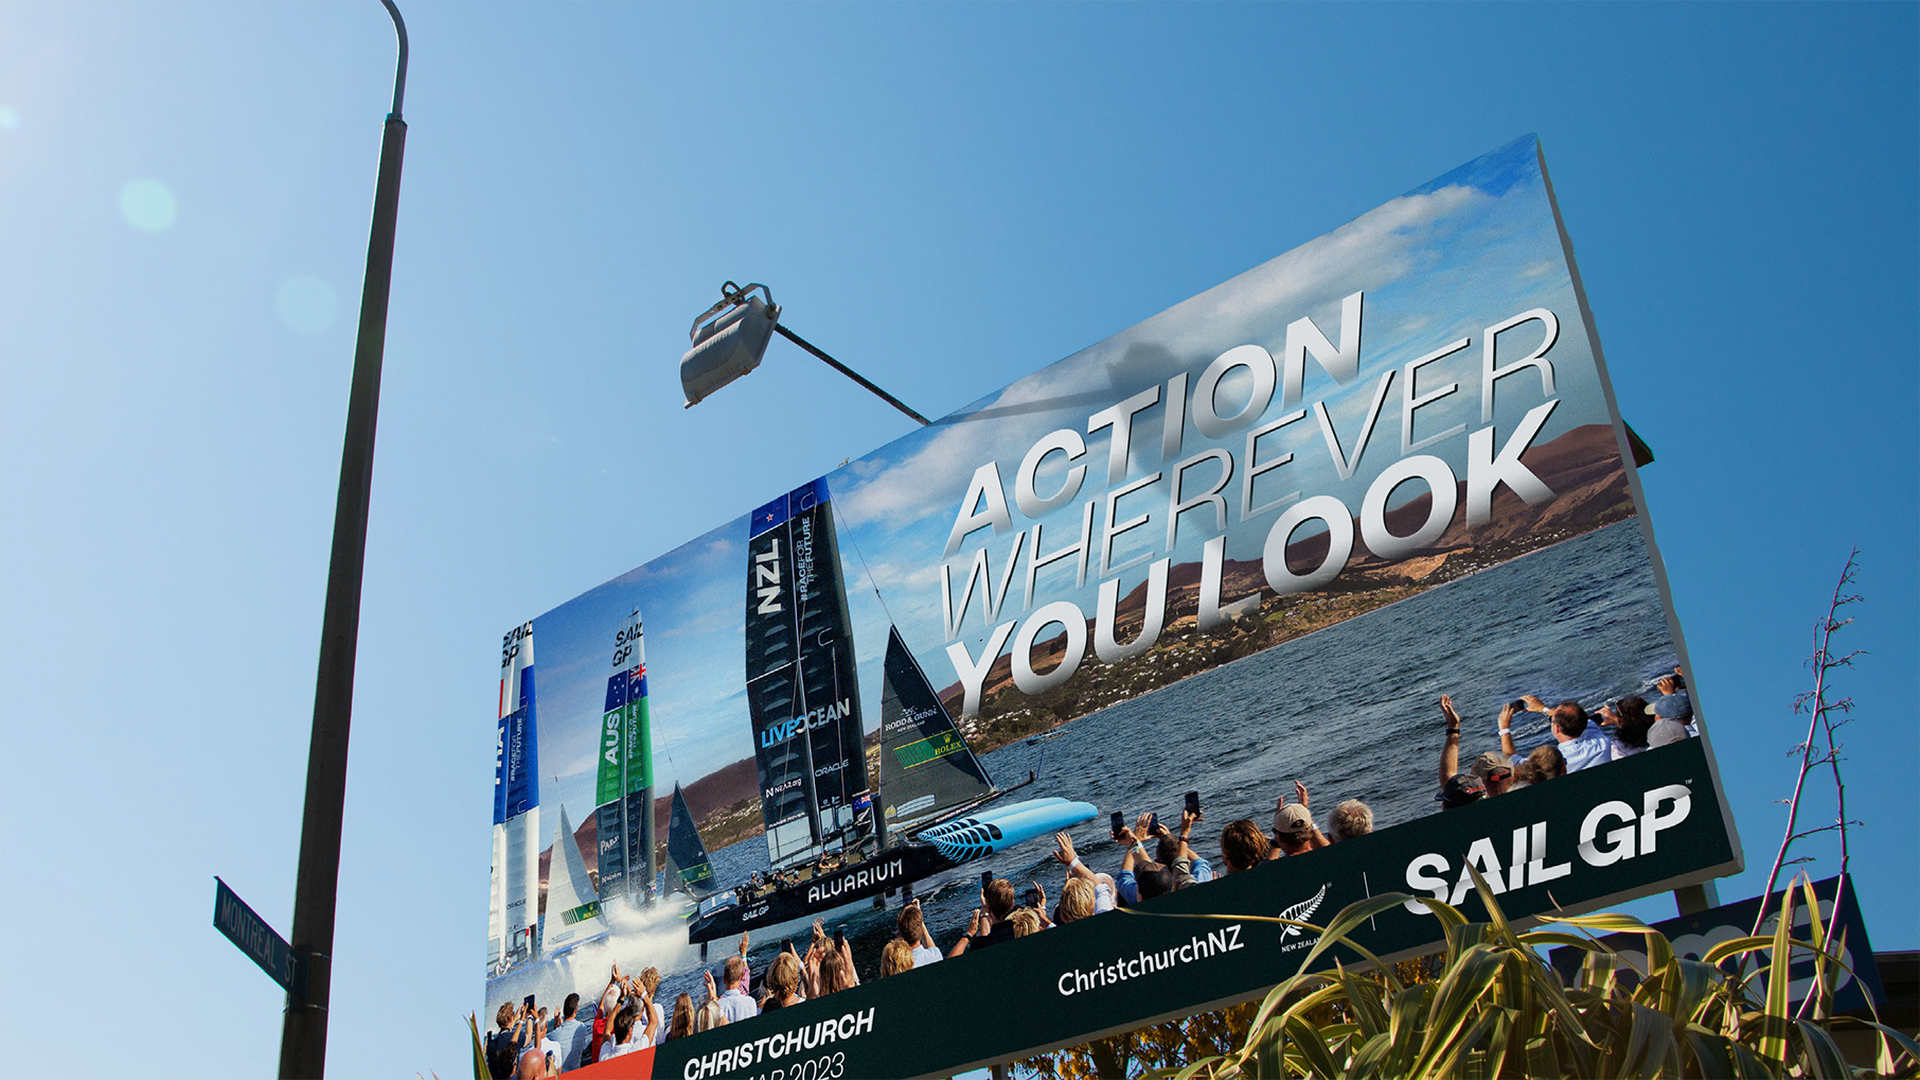 Concept of Sail GP billboard